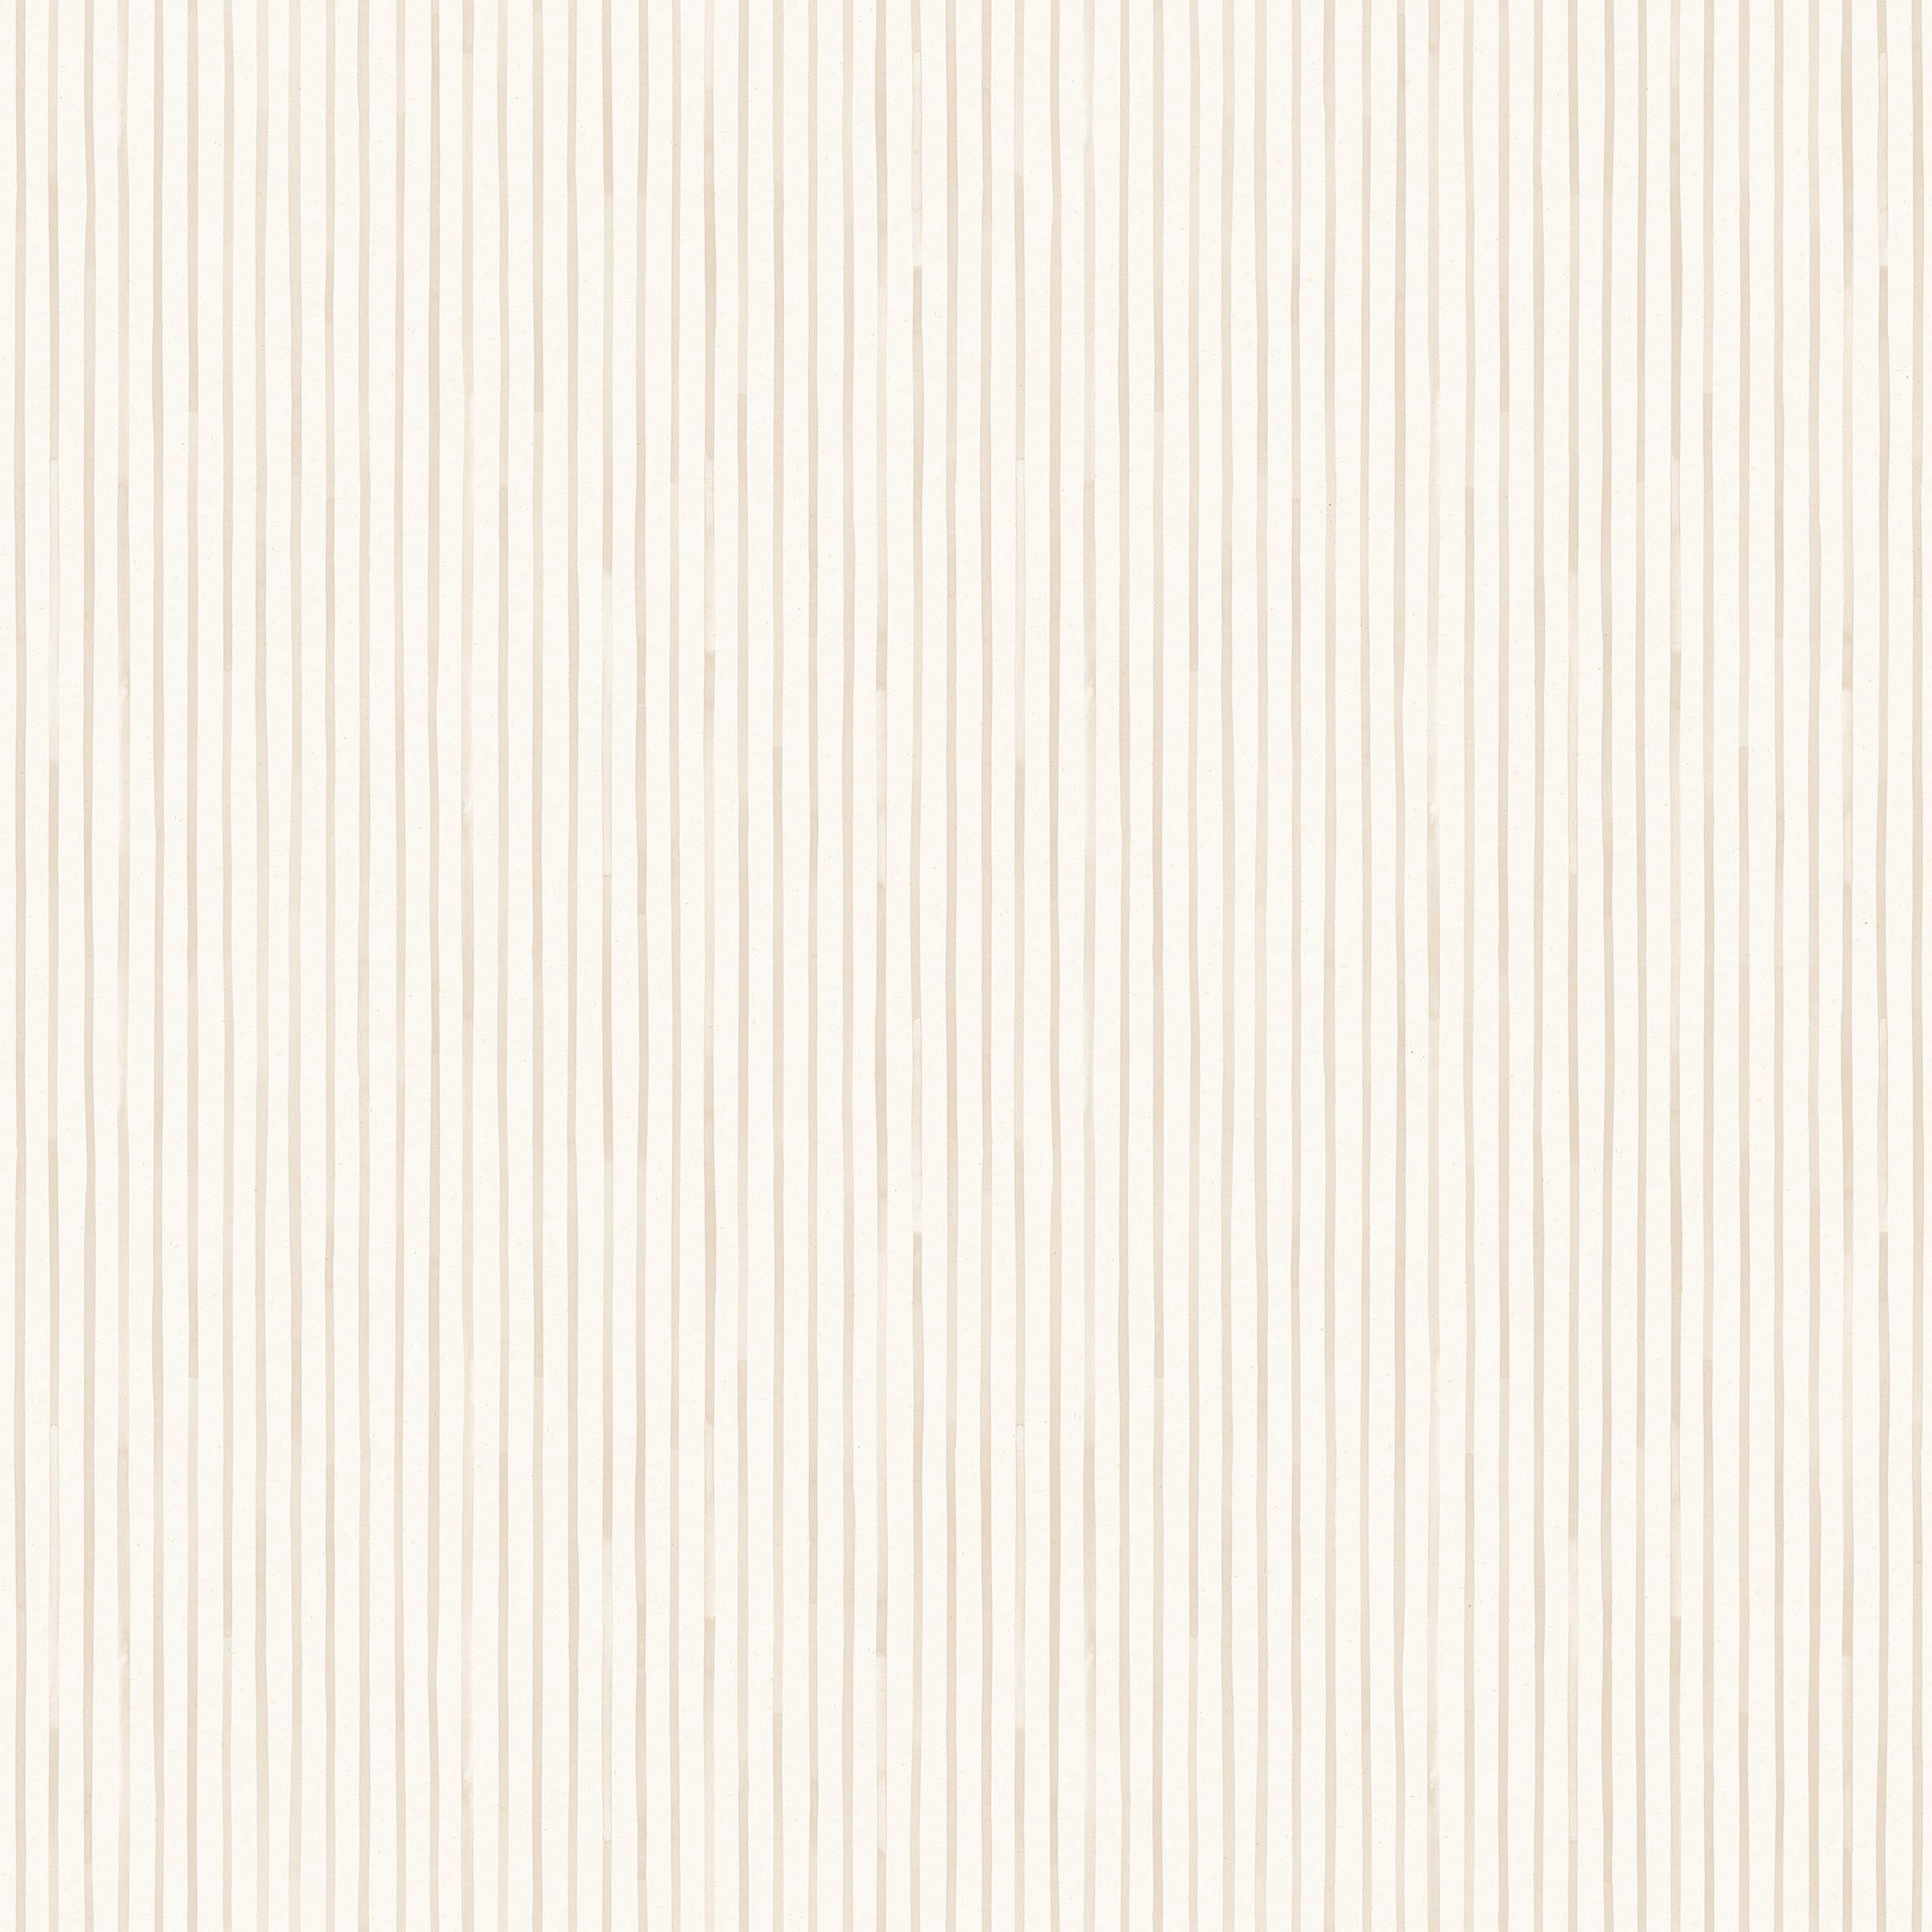 Detail of wallpaper in a painterly stripe pattern in cream on a white field.